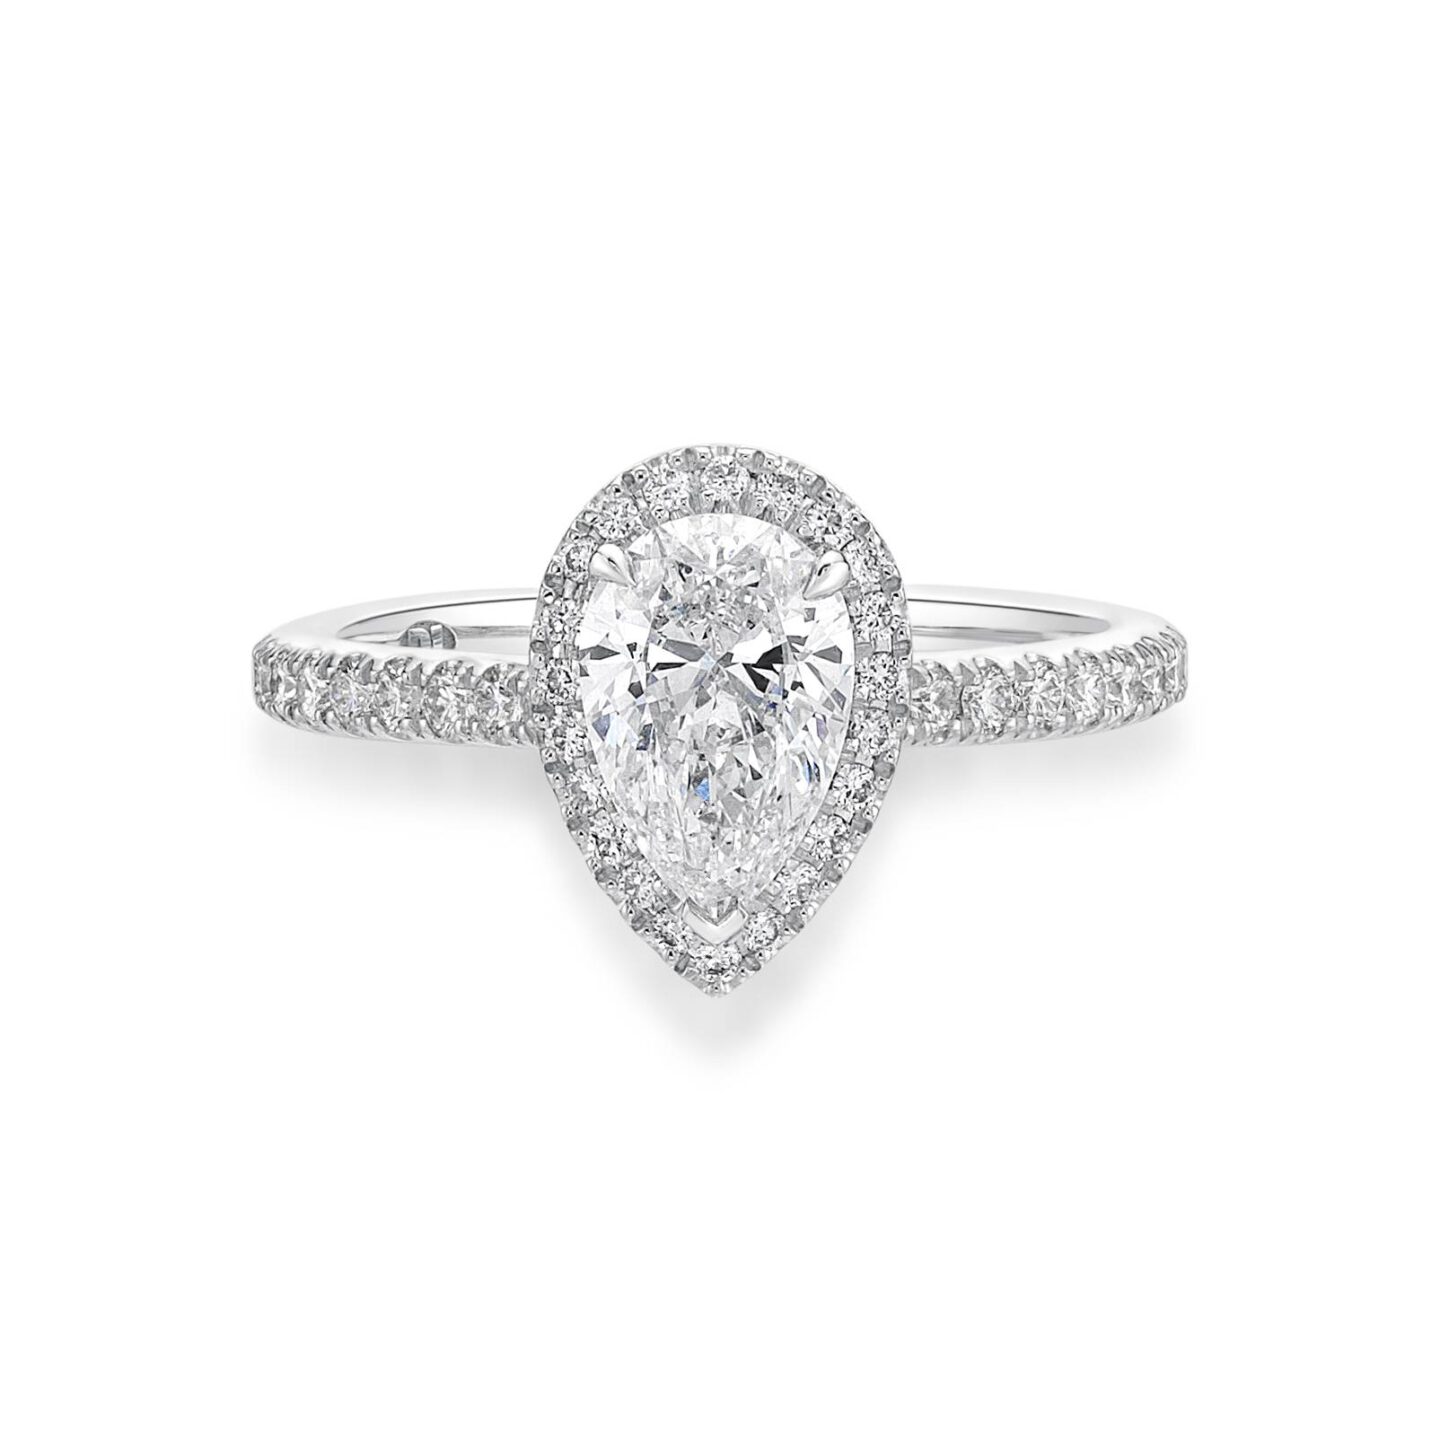 Halley – Pear Cut Diamond Engagement Ring